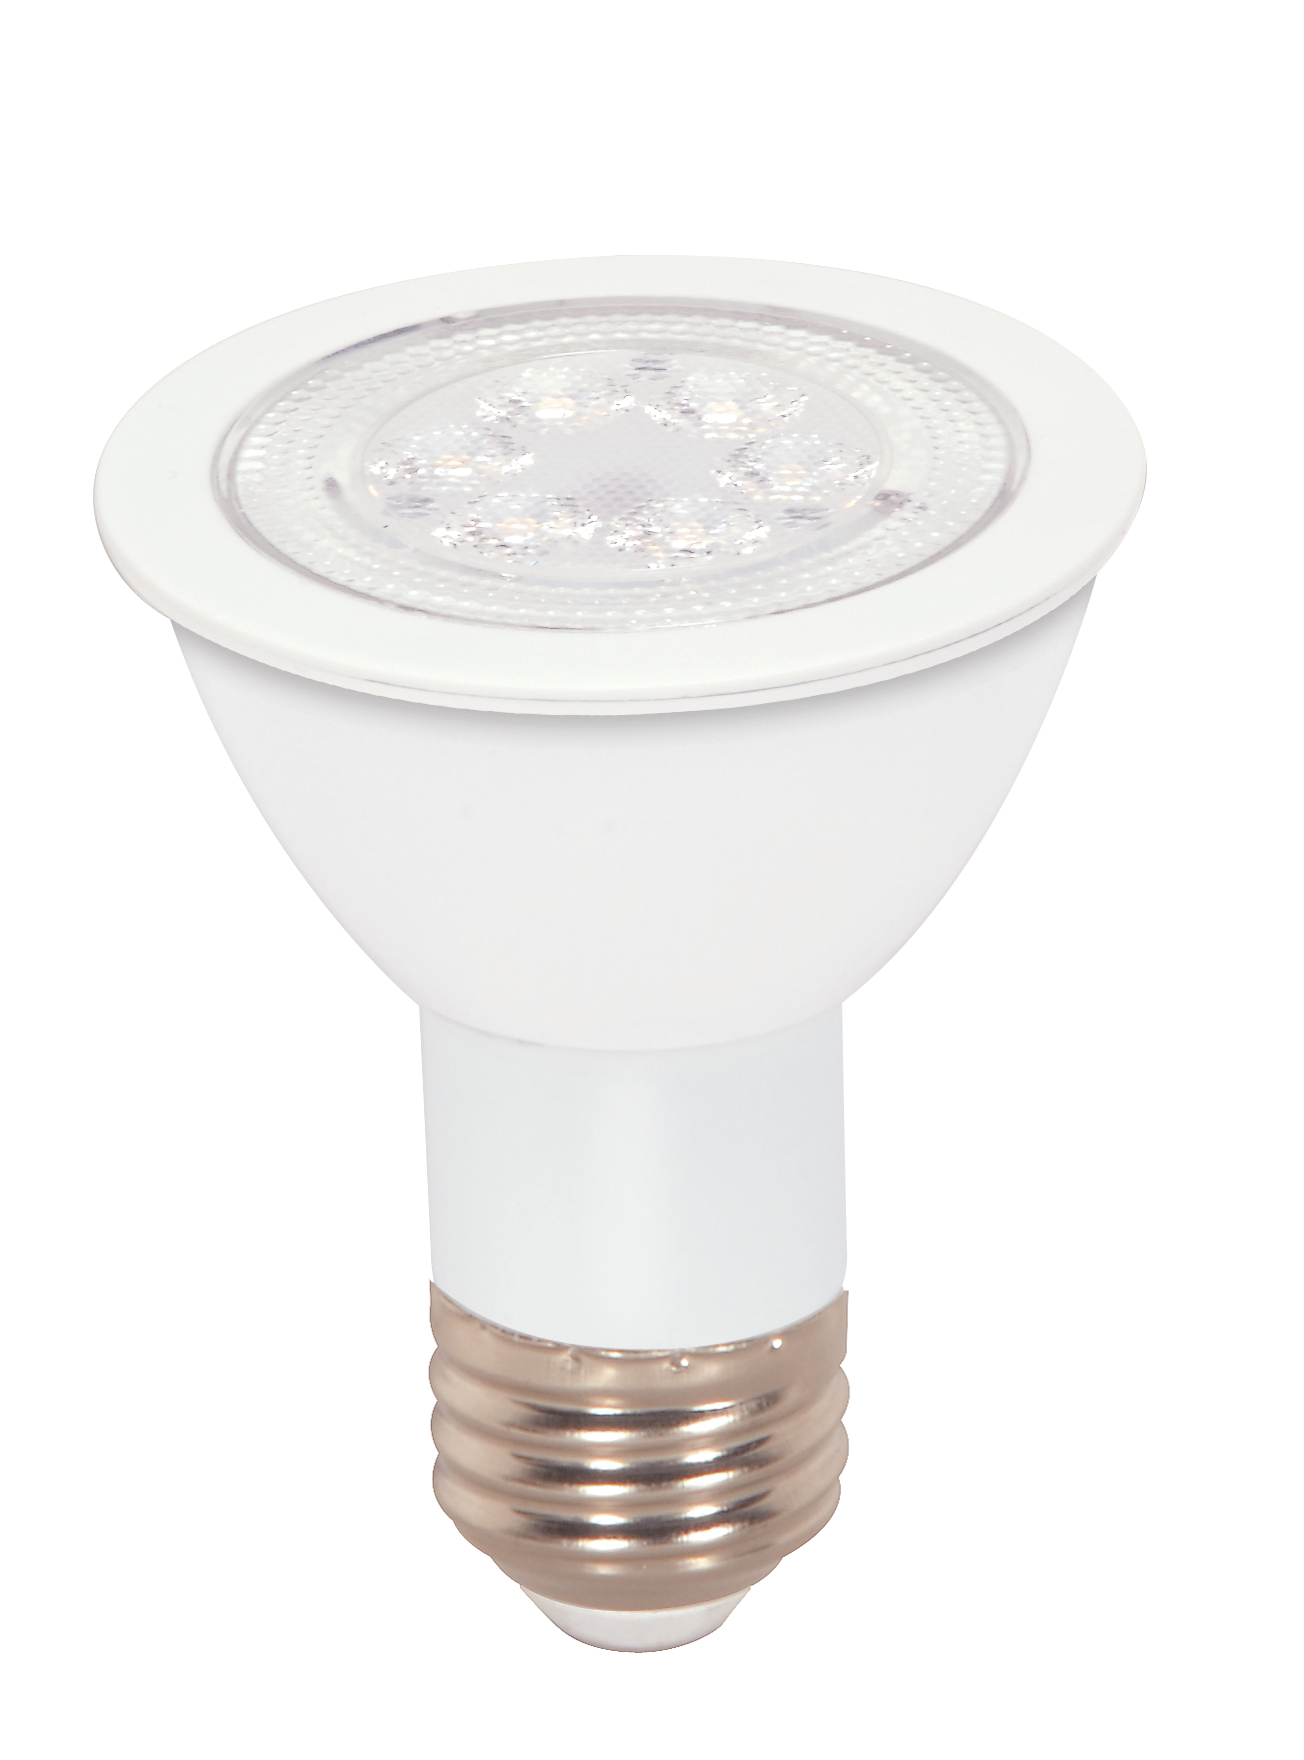 PAR LED, Designation: 7W LED PAR20 - 40' Beam Spread - Medium Base - 120V - Amber